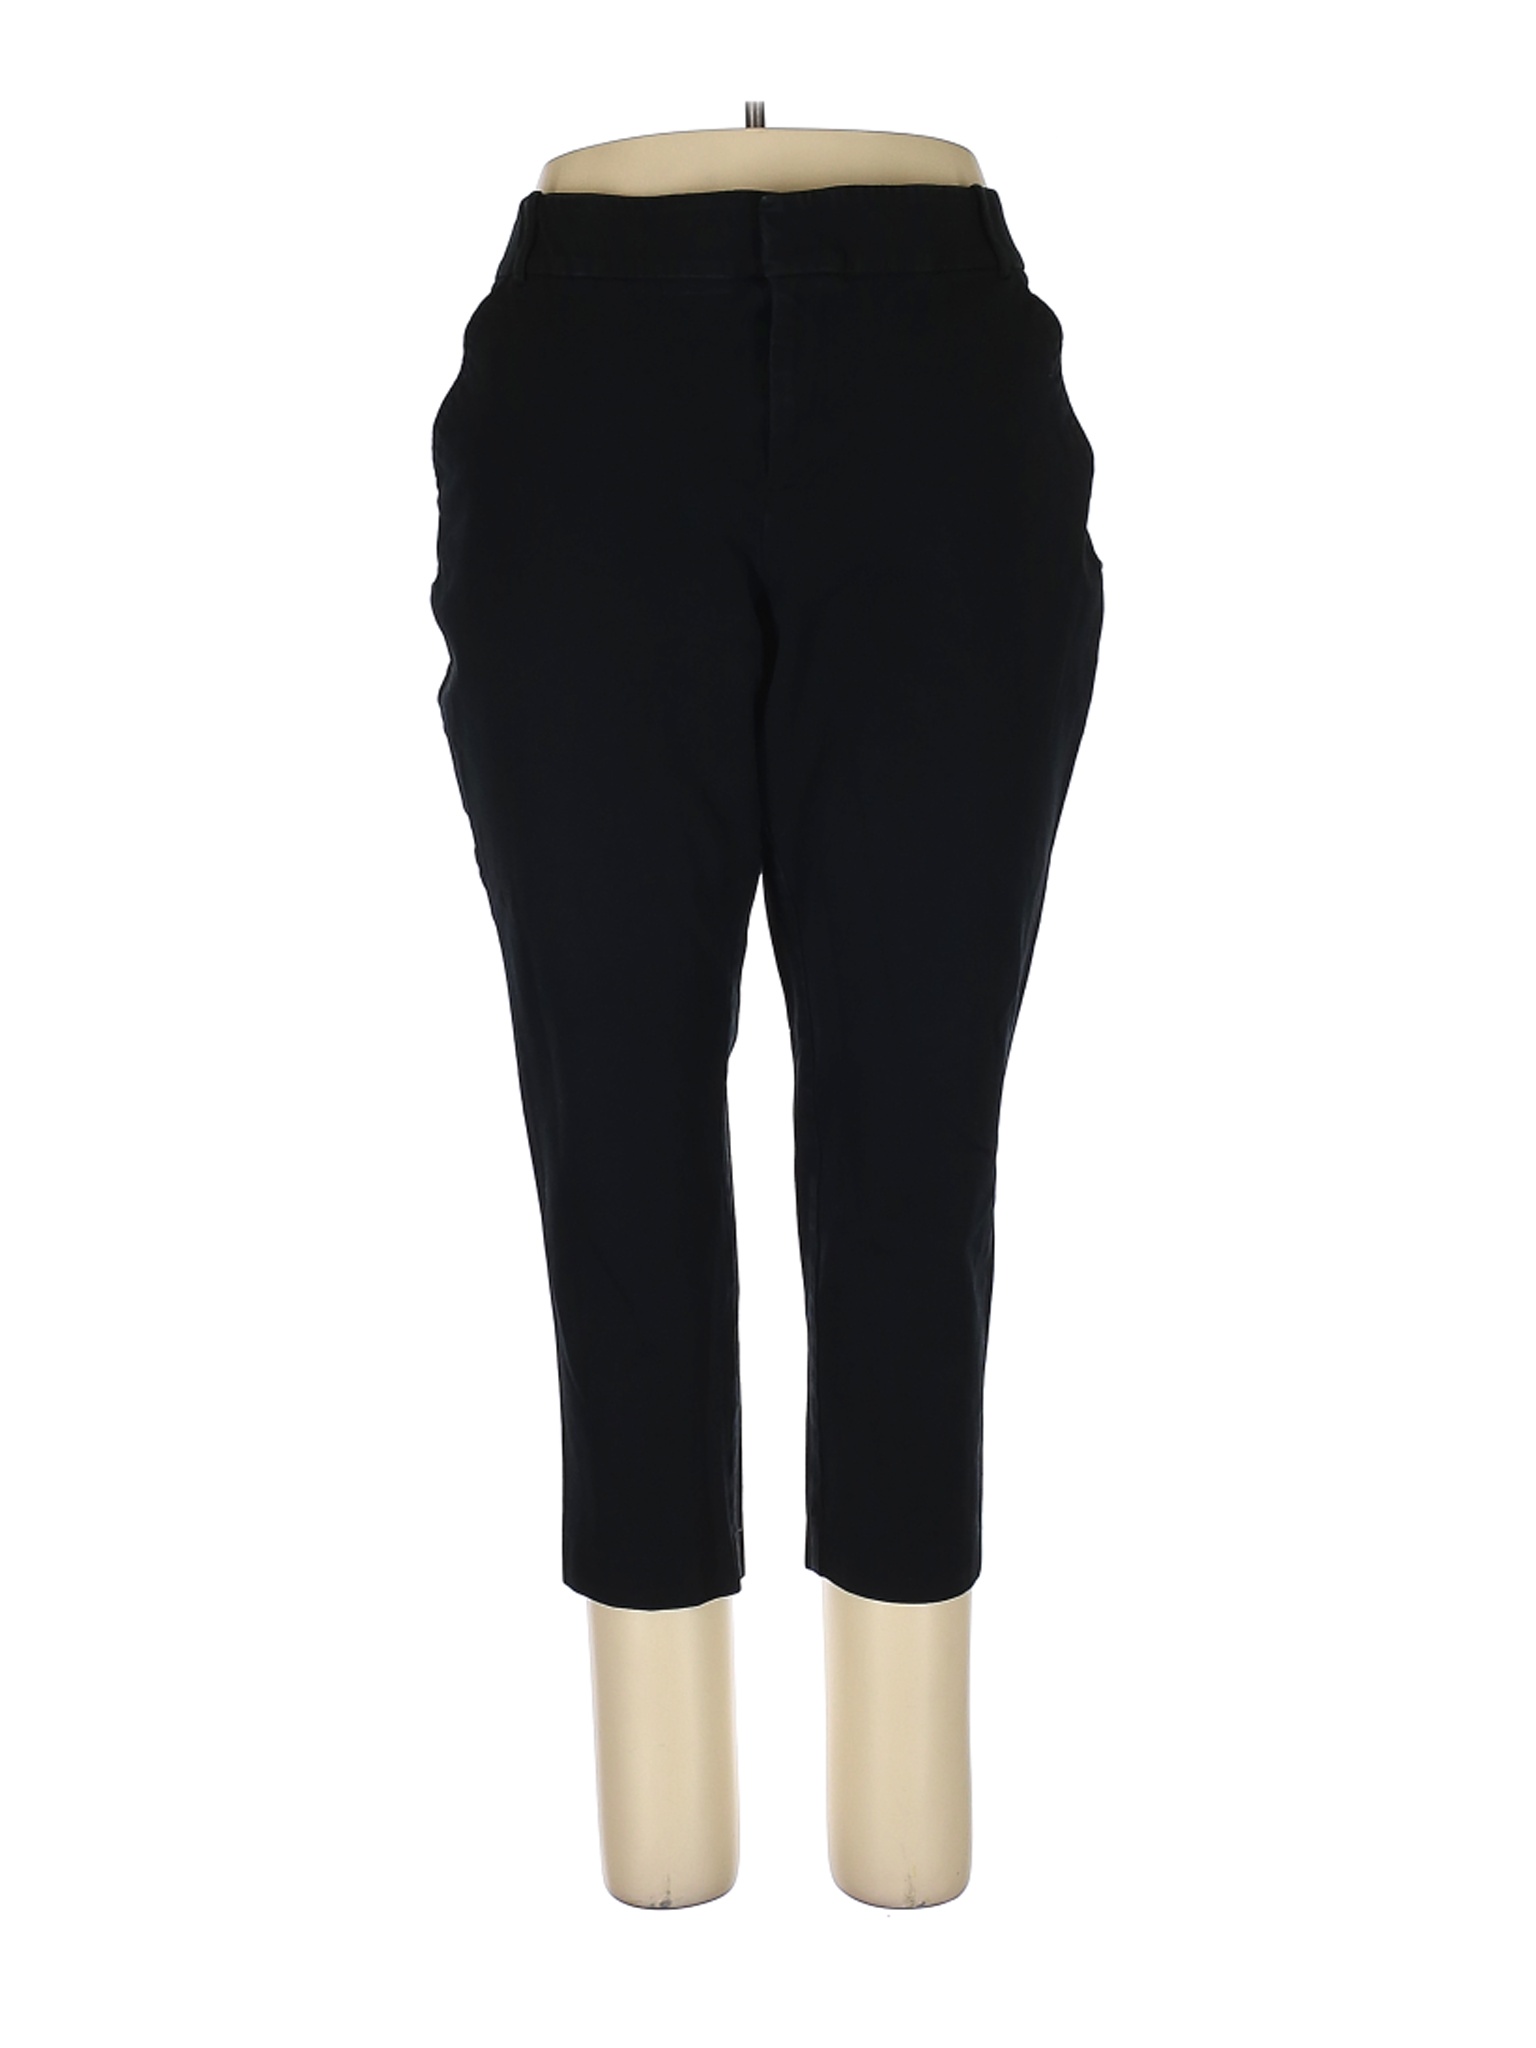 Ava & Viv Women Black Casual Pants 20 Plus | eBay